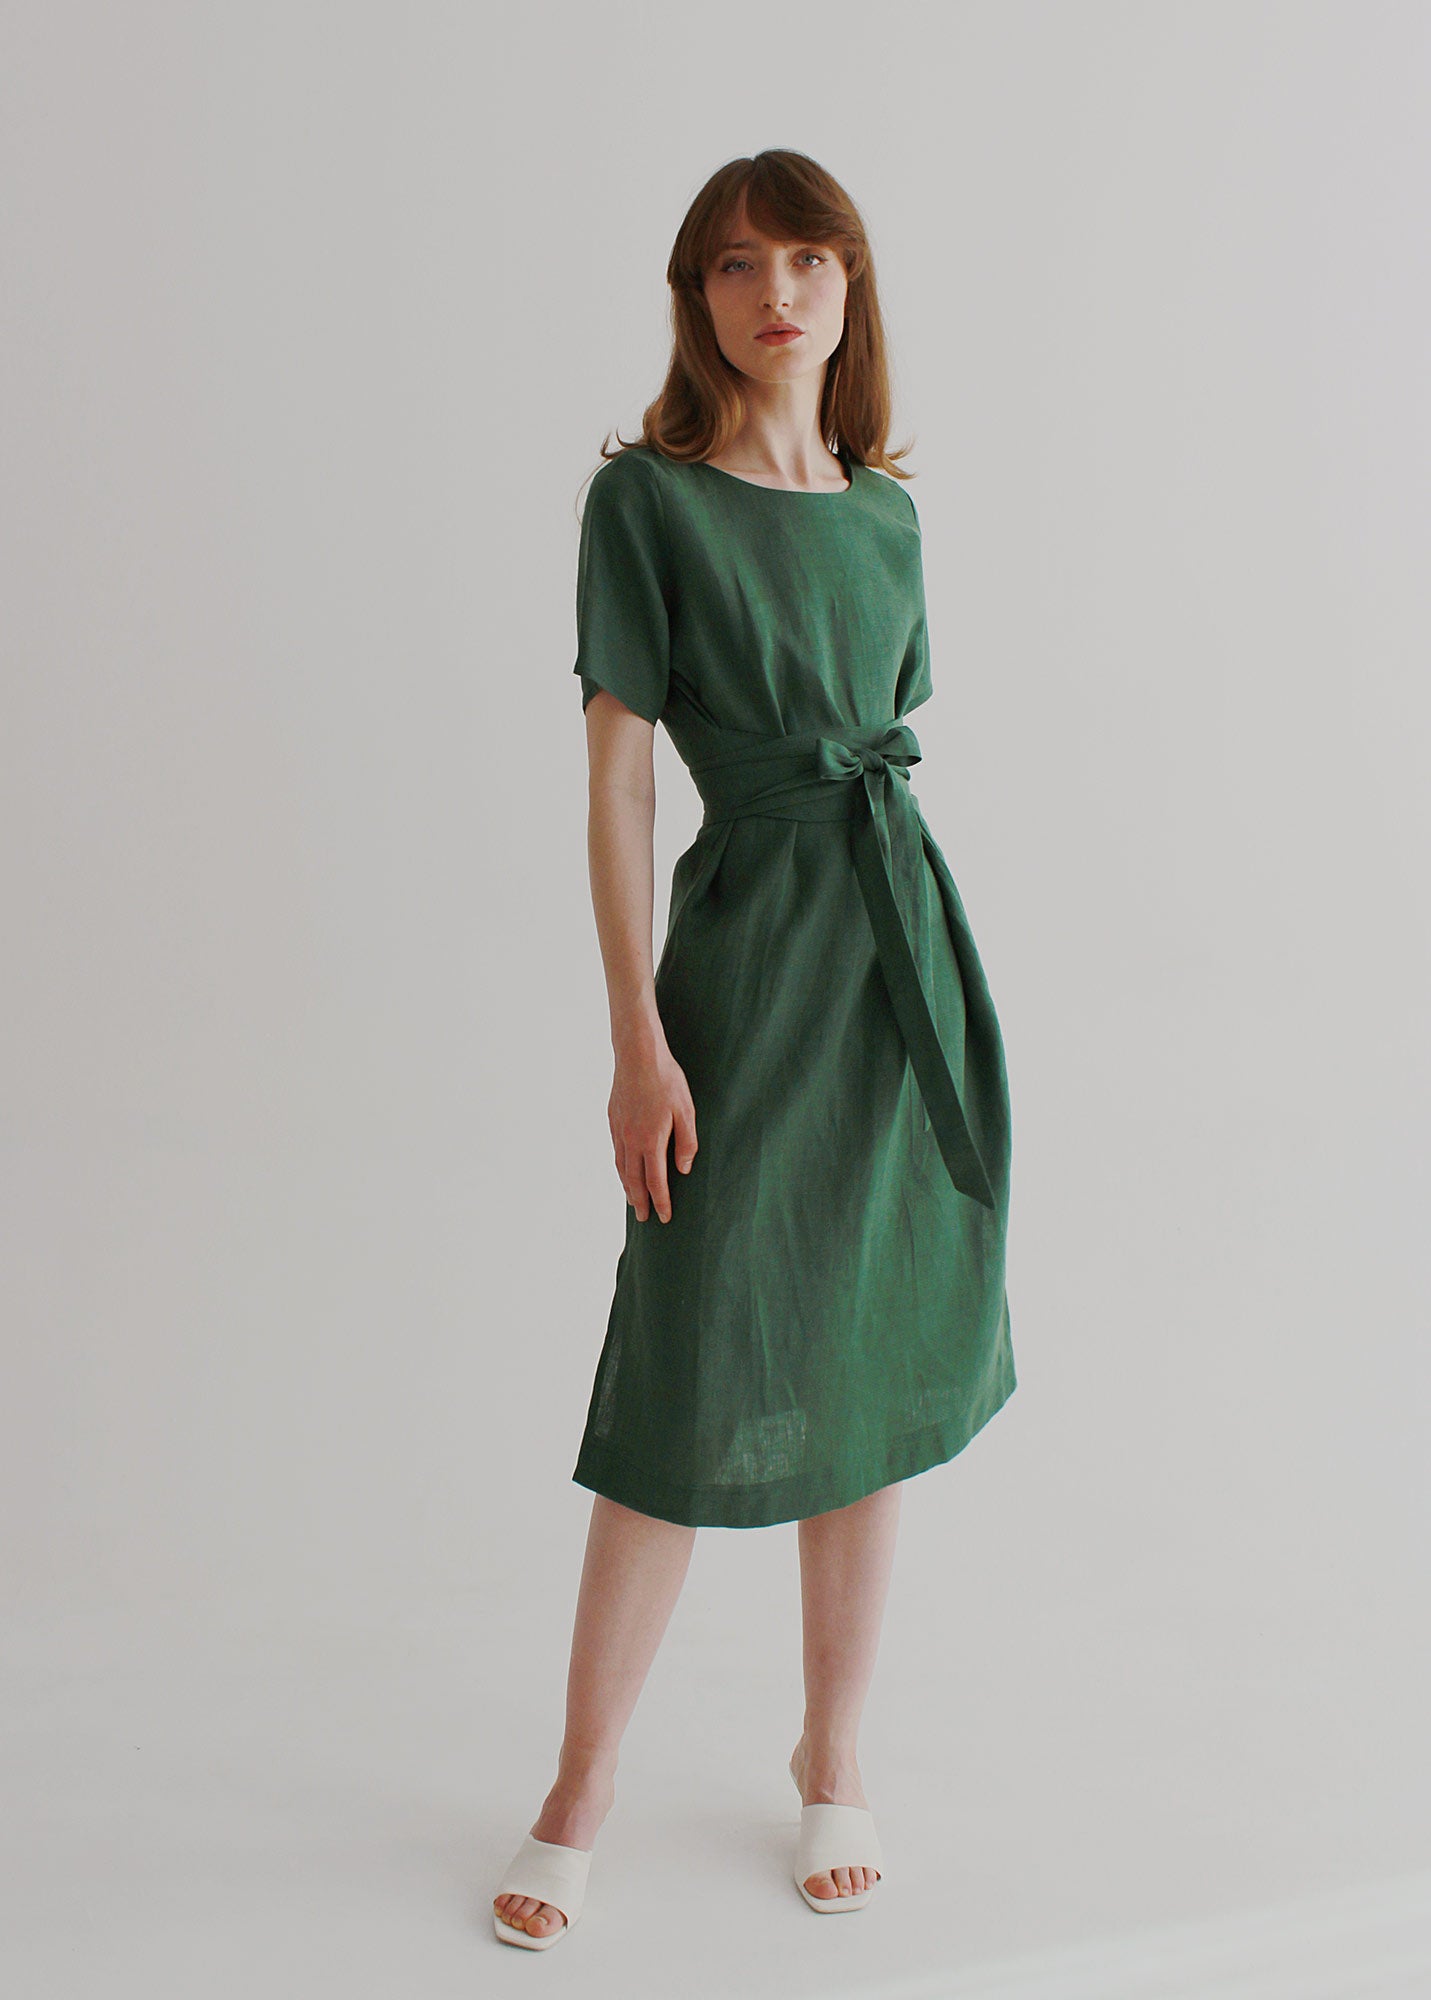  "Adelia" grünes langes Kleid